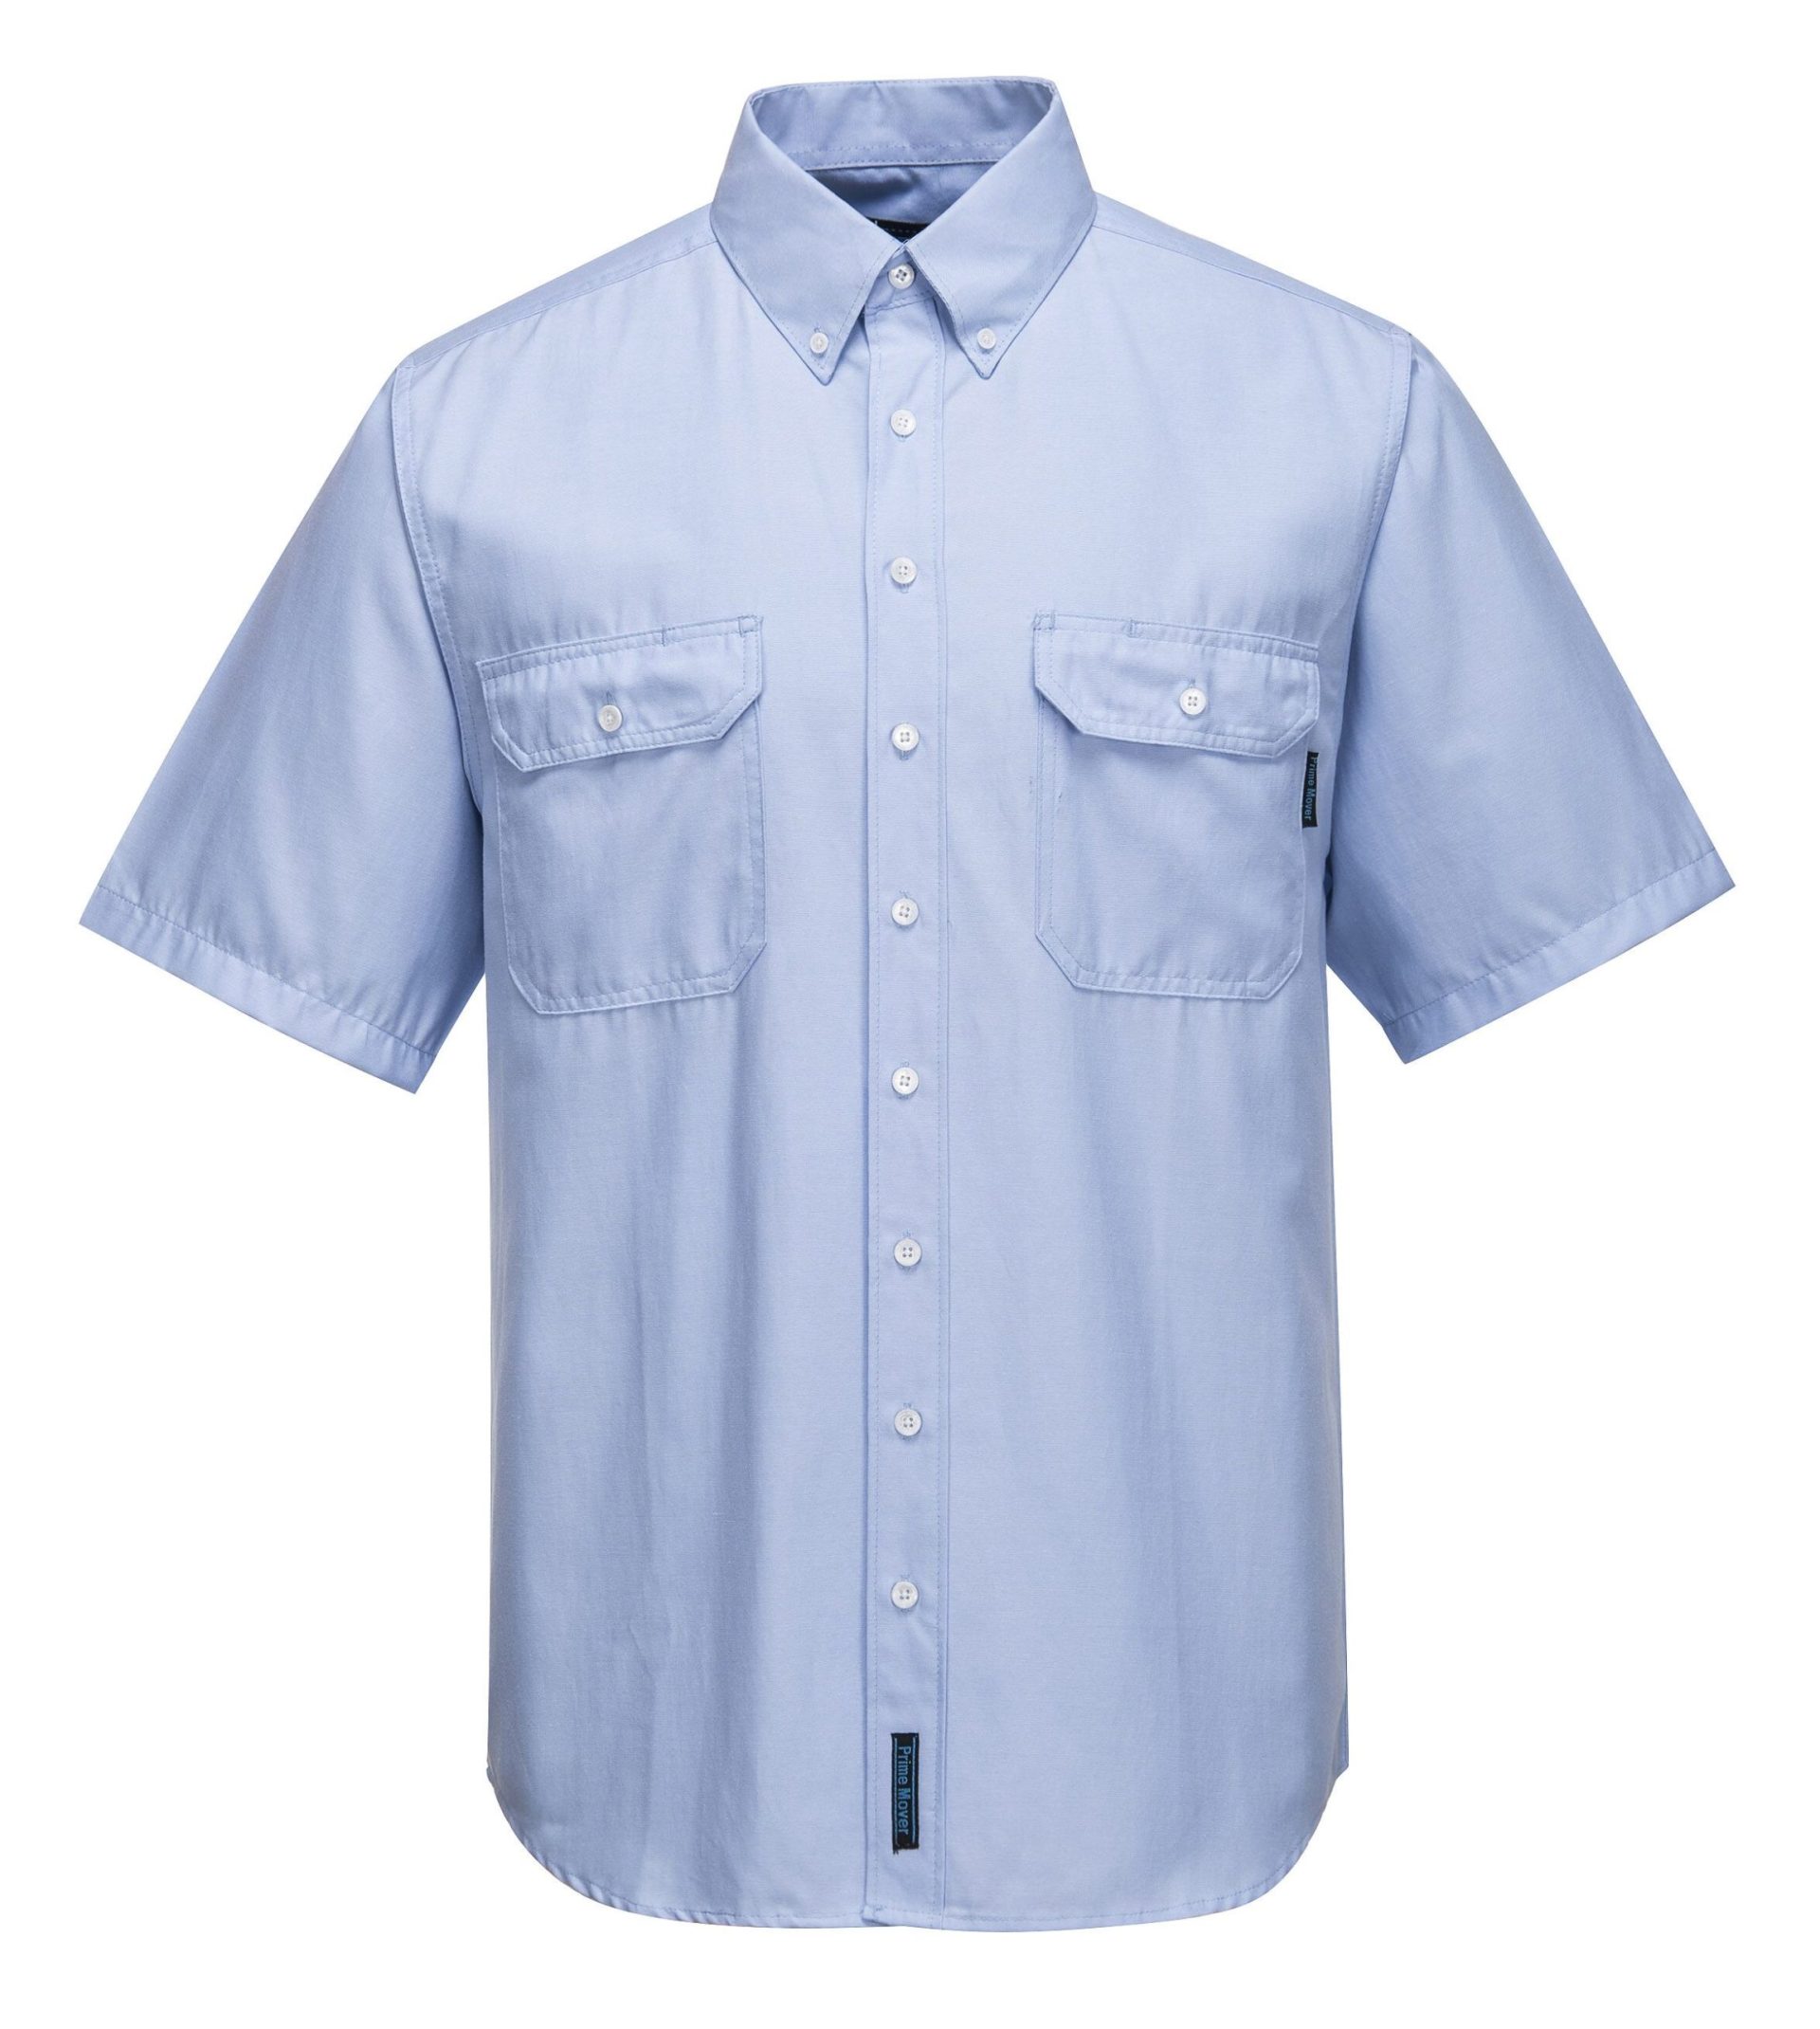 Sydney Shirt, Classic Chambray Light Weight Shirt in Light Blue